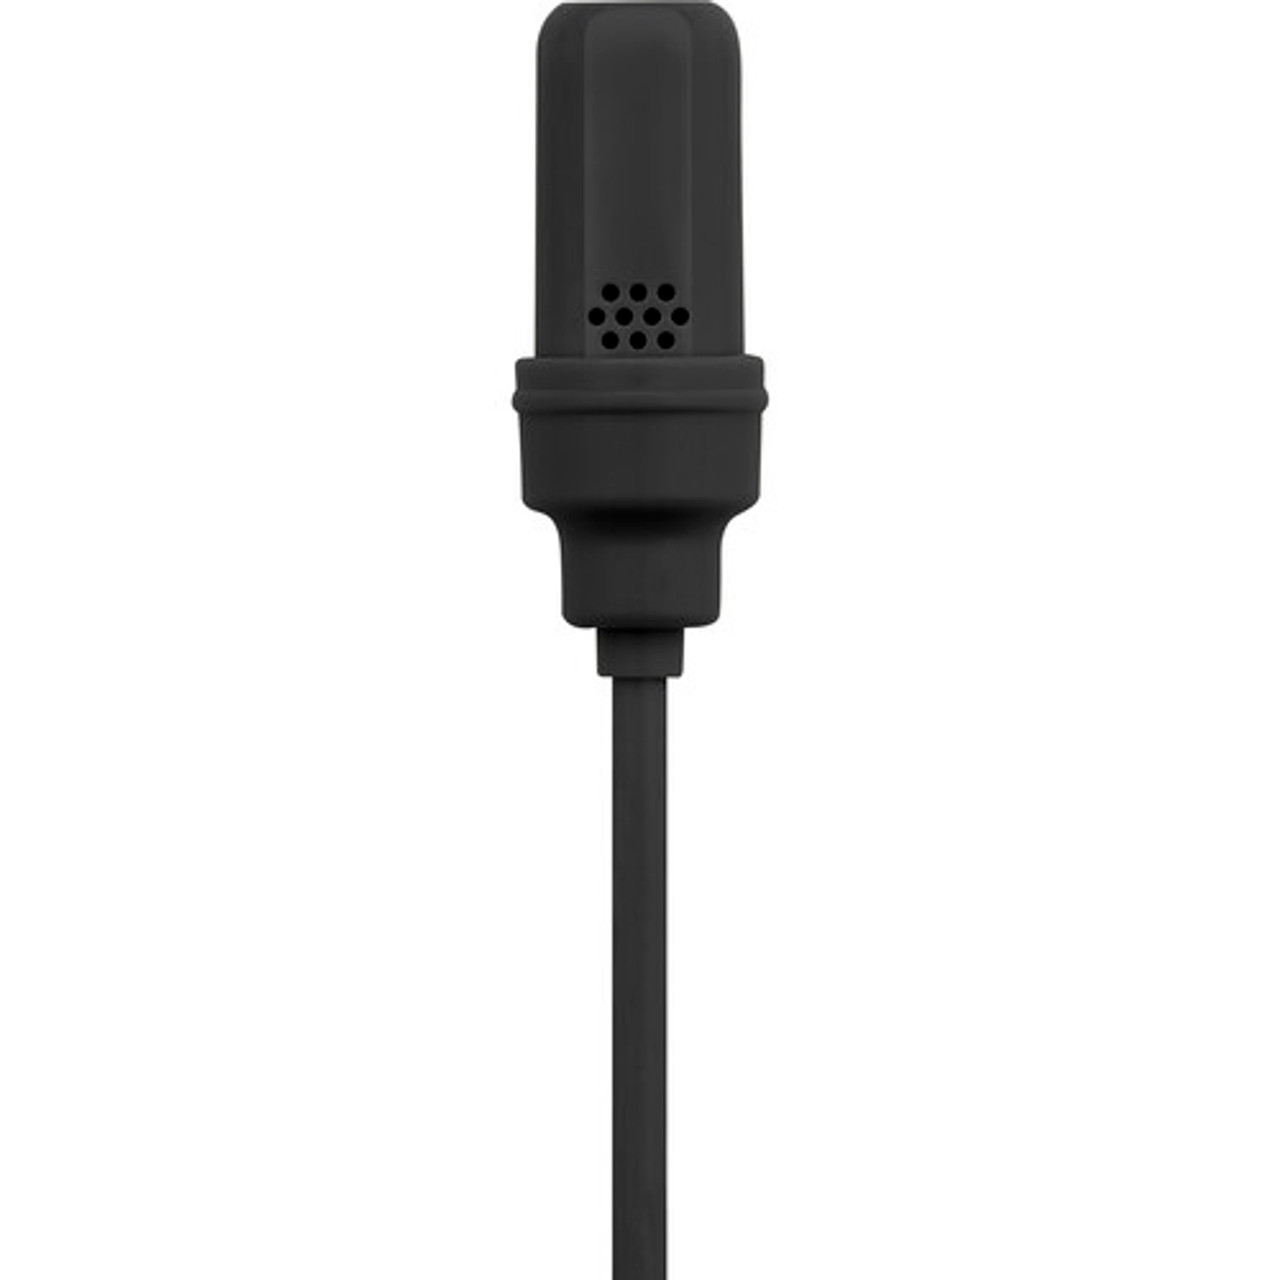 Shure UL4B/C-LM3-A UL4 UniPlex Cardioid Subminiature Lavalier Microphone for Bodypack Transmitter (UL4B/C-LM3-A)